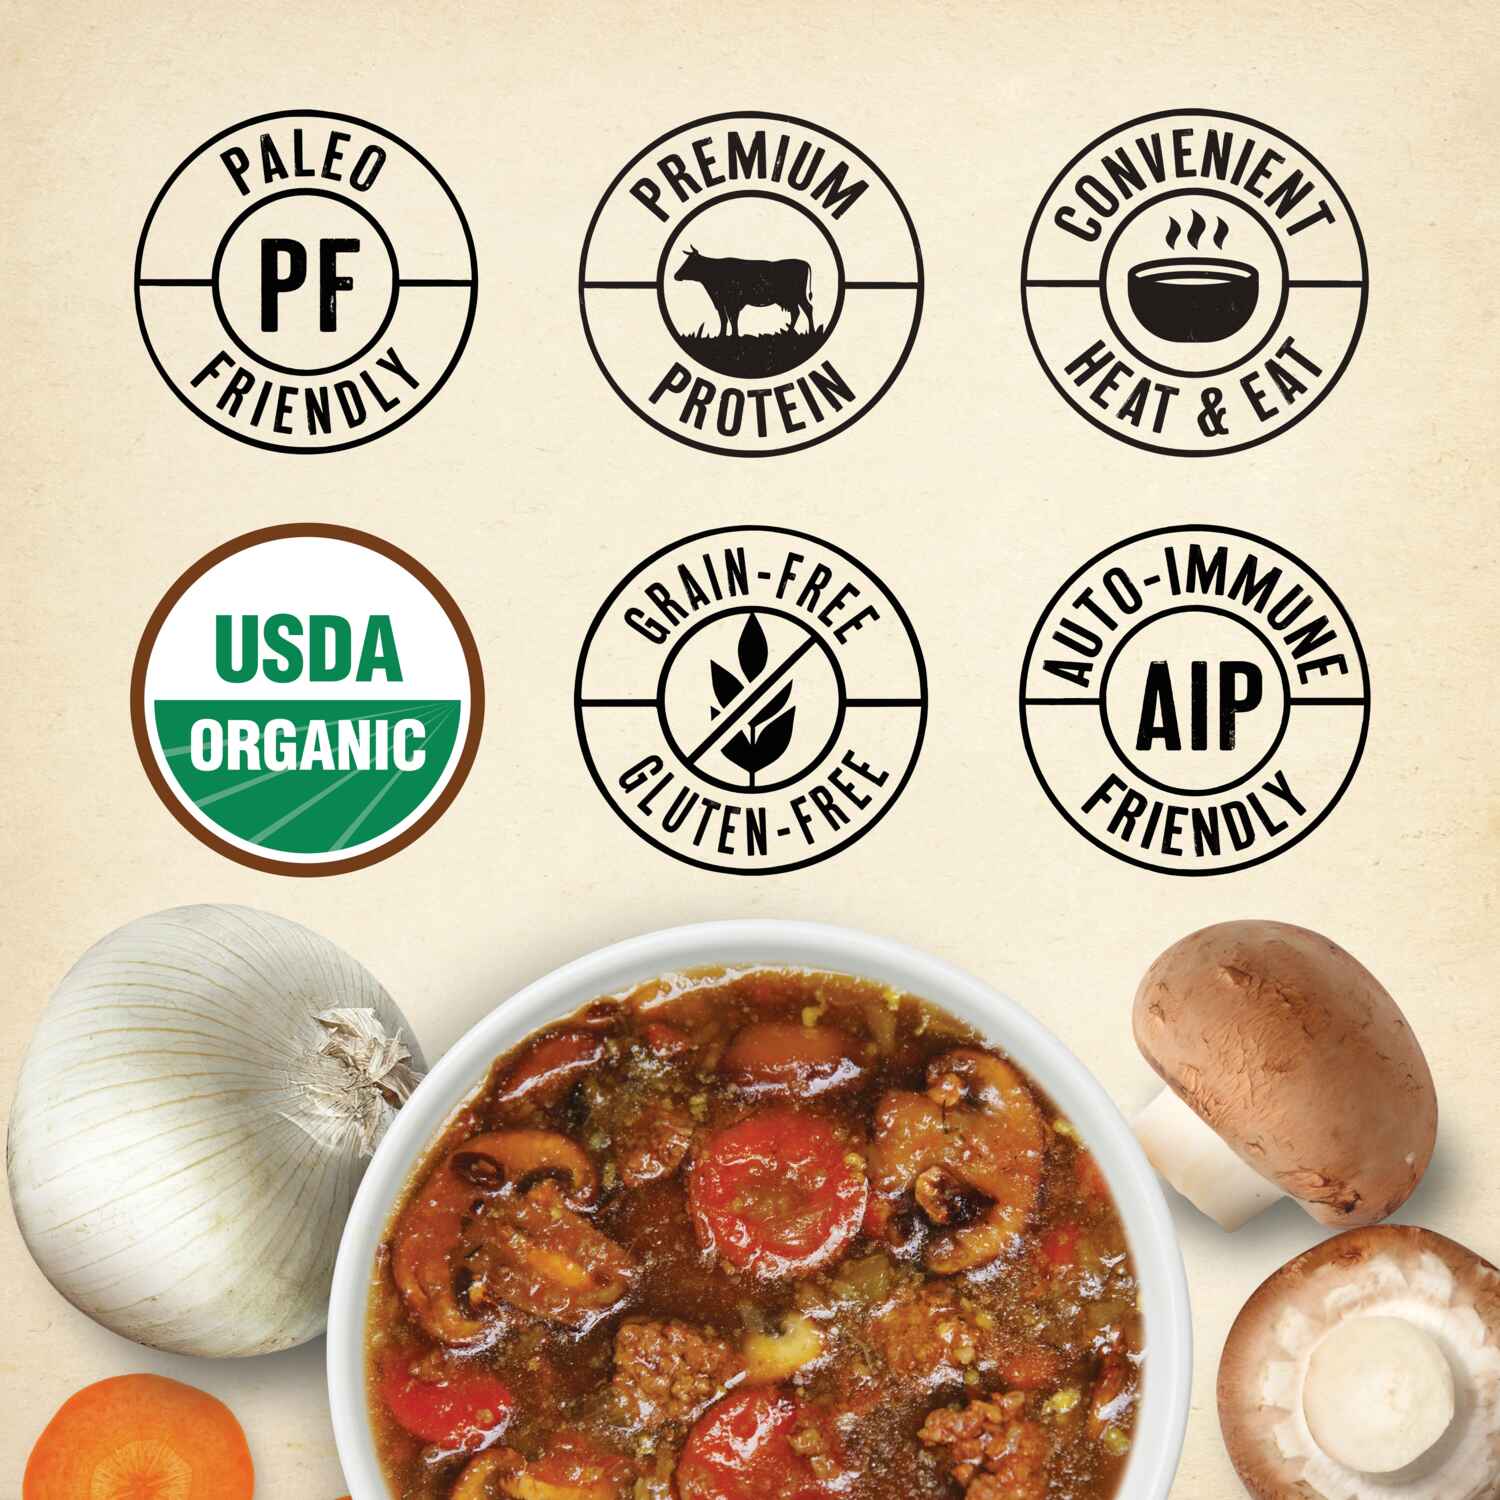 True Primal Beef and Mushroom Organic Soup benefits